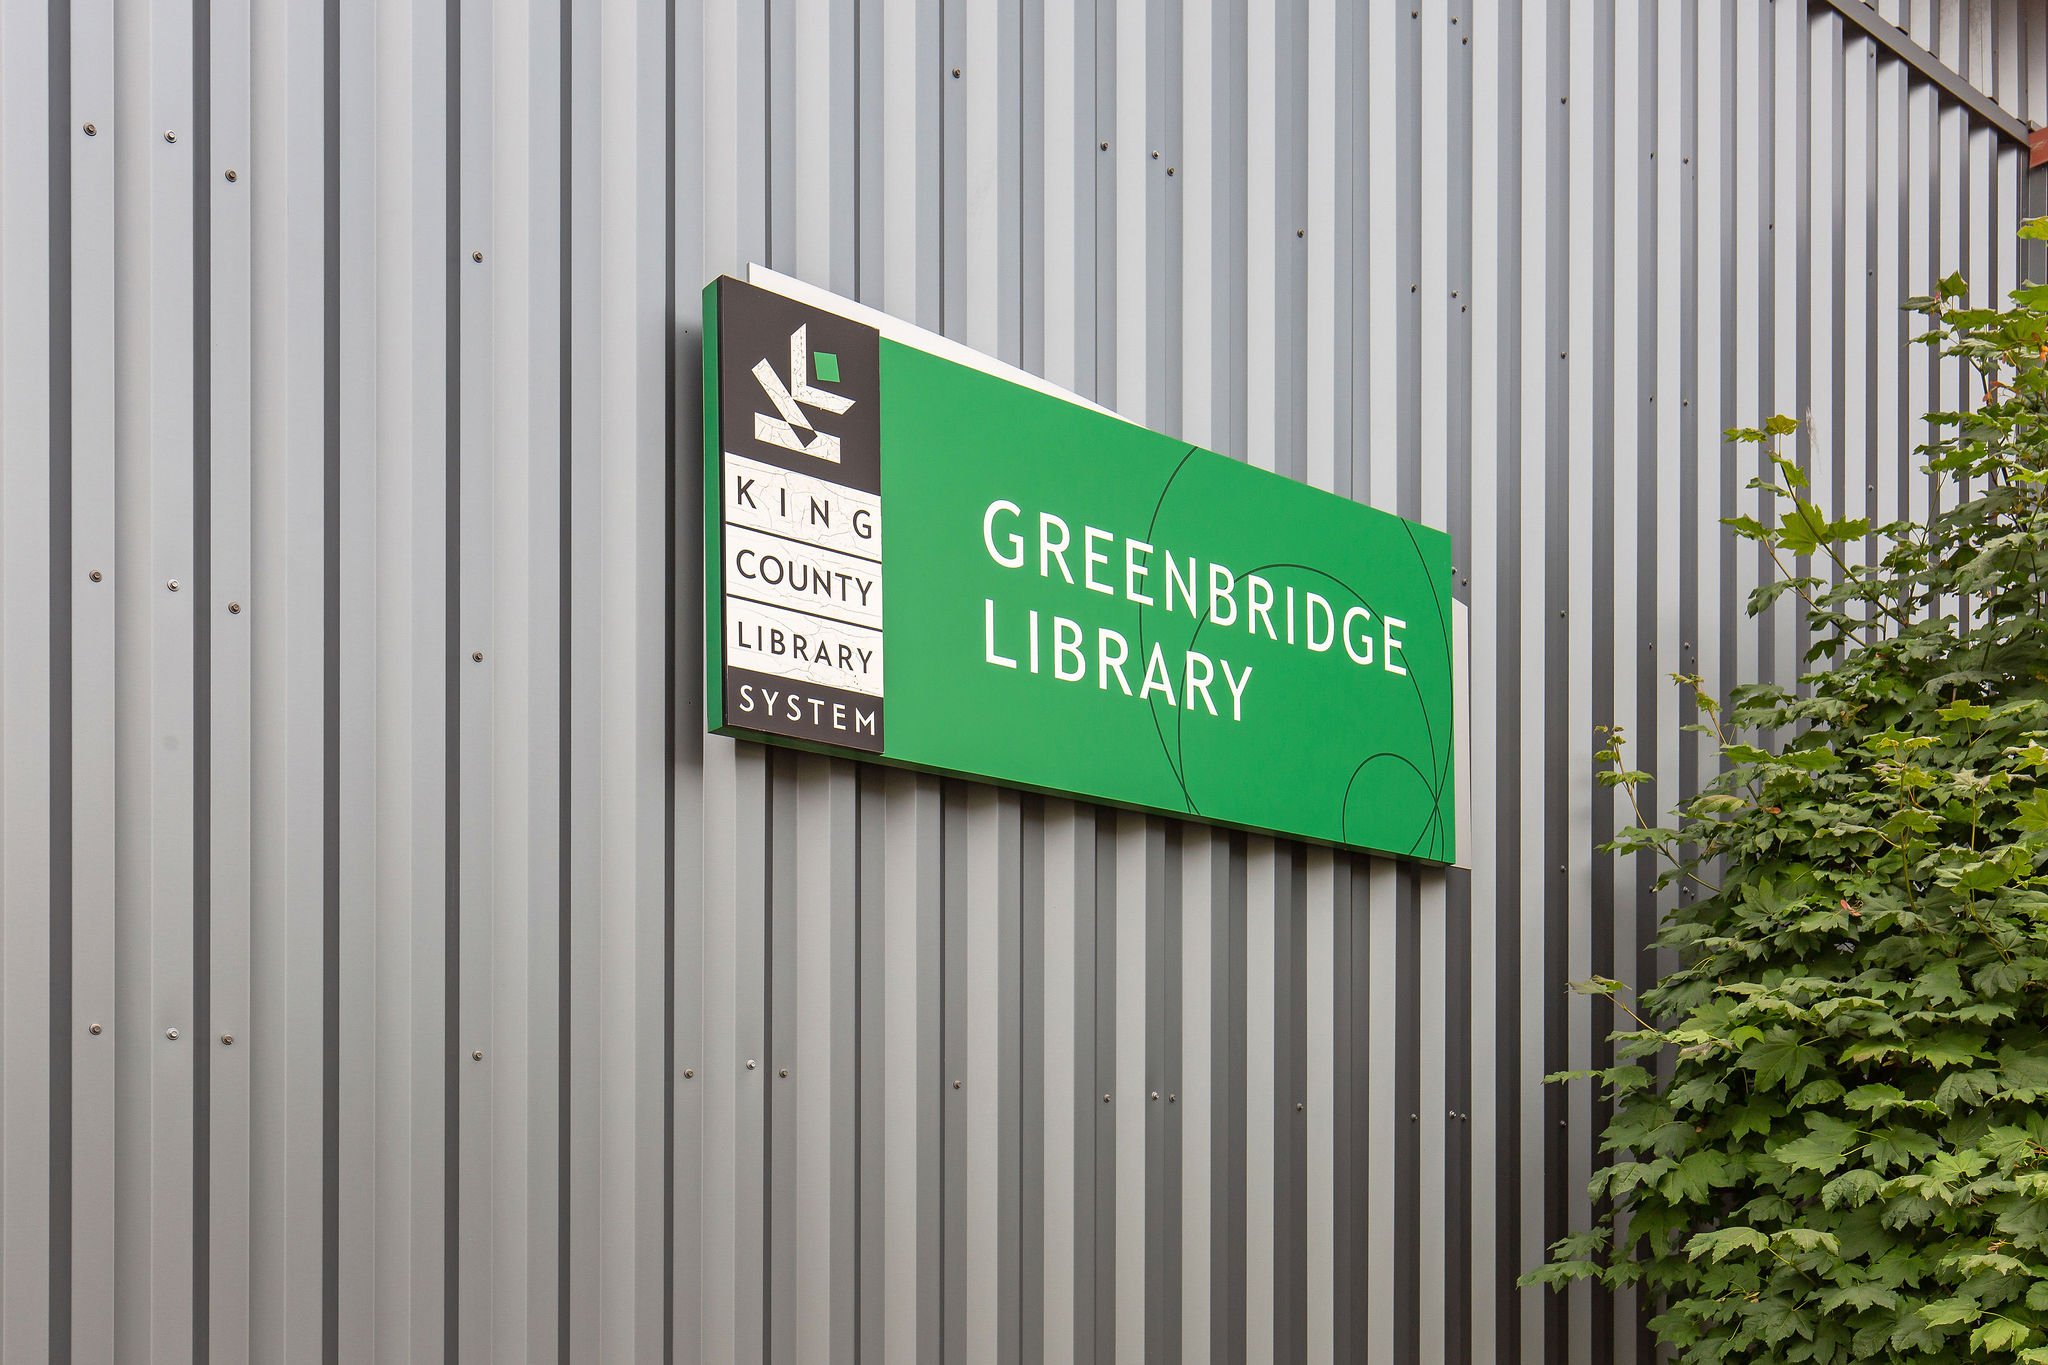  image description: exterior of greenbridge library 